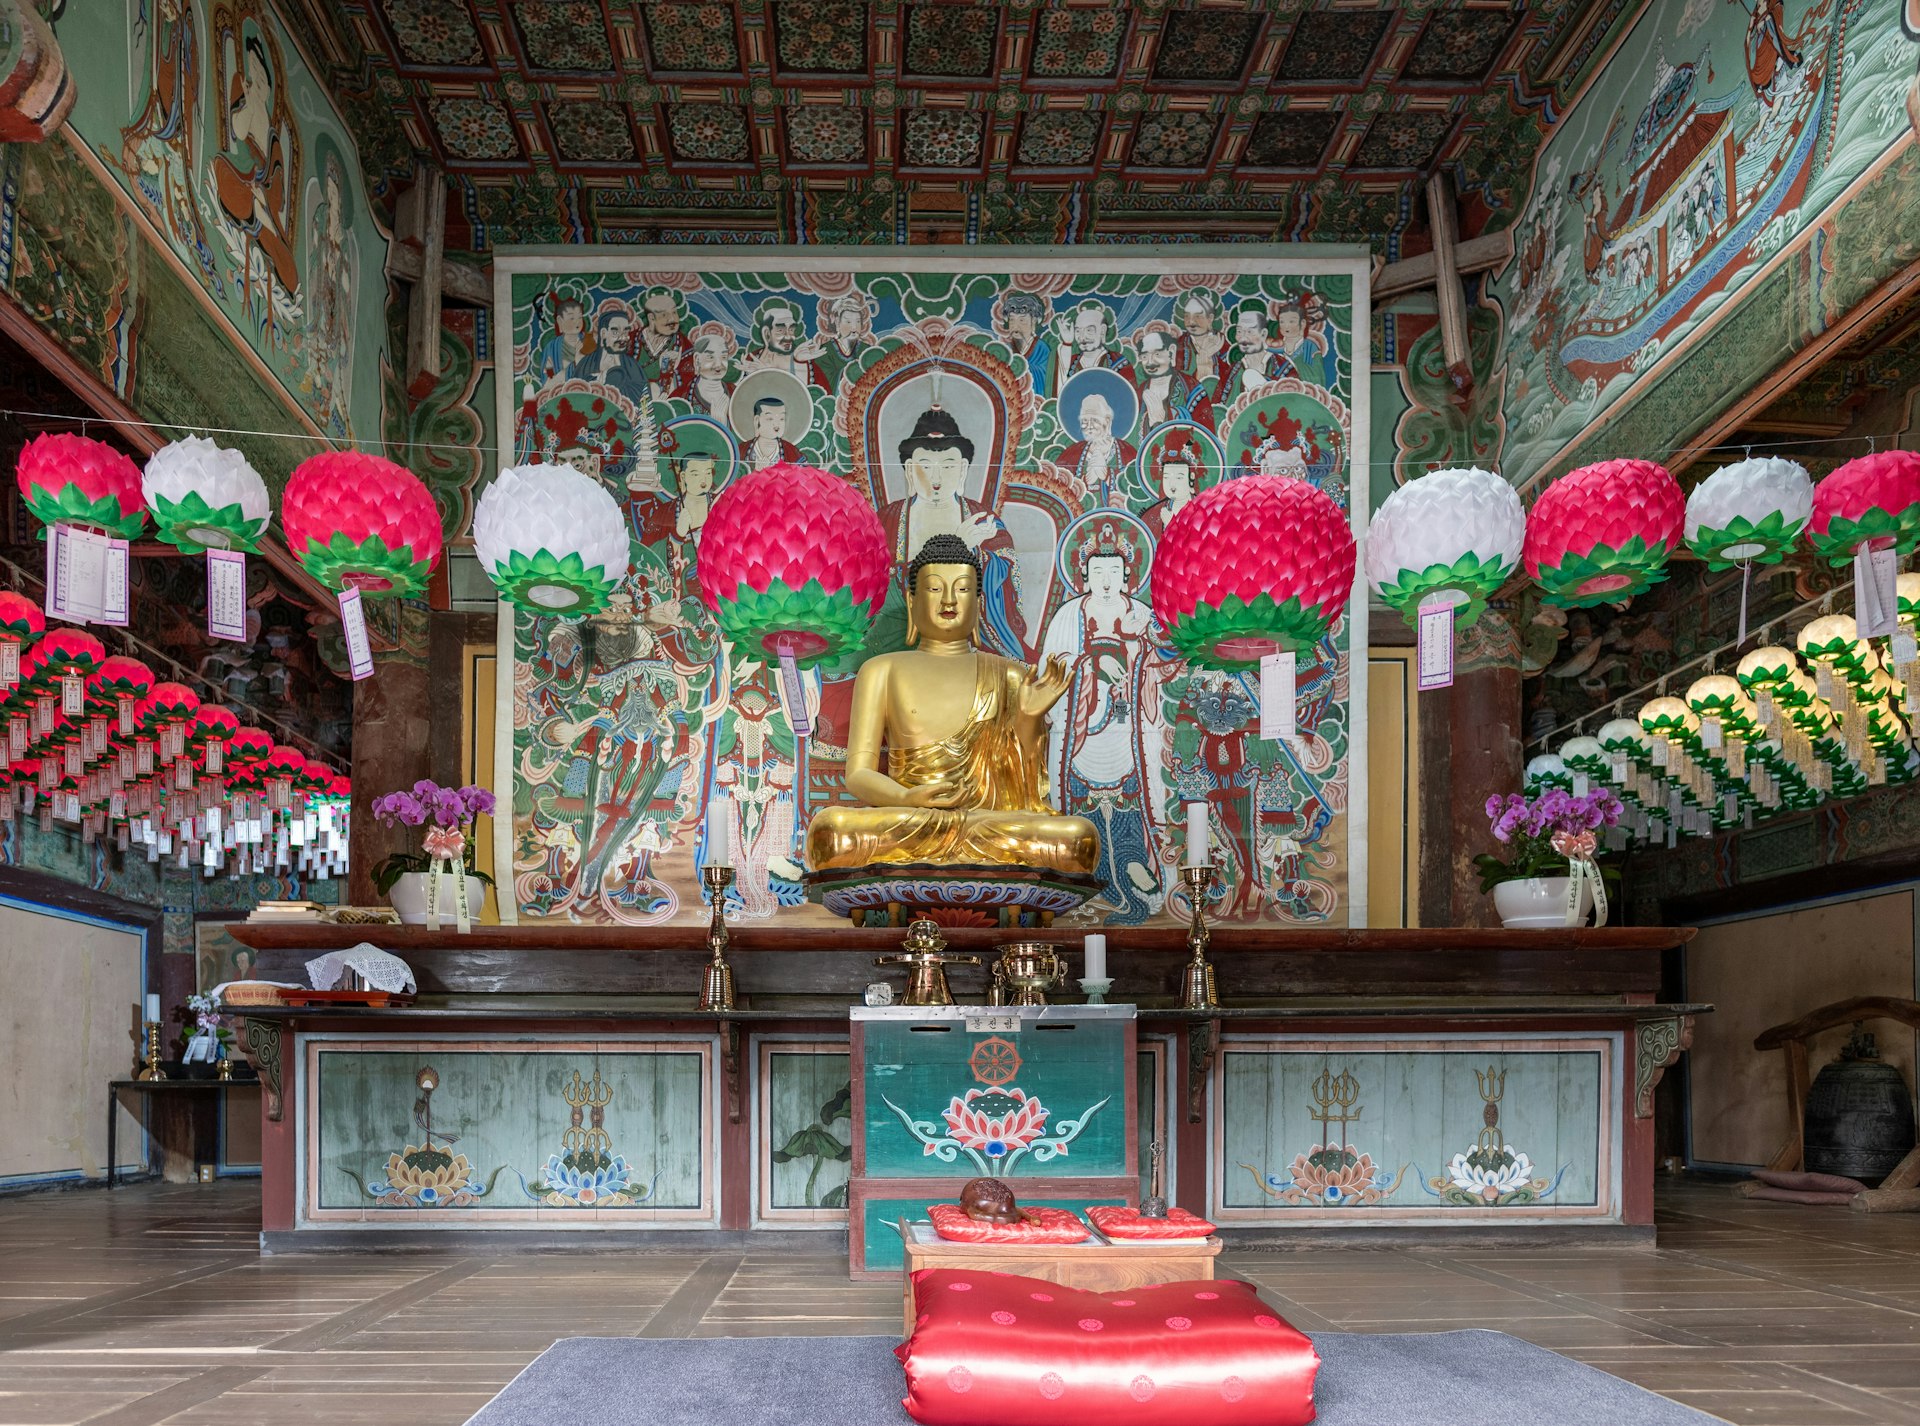 A shrine at the Bulguksa Buddhist temple in Gyeongju, South Korea